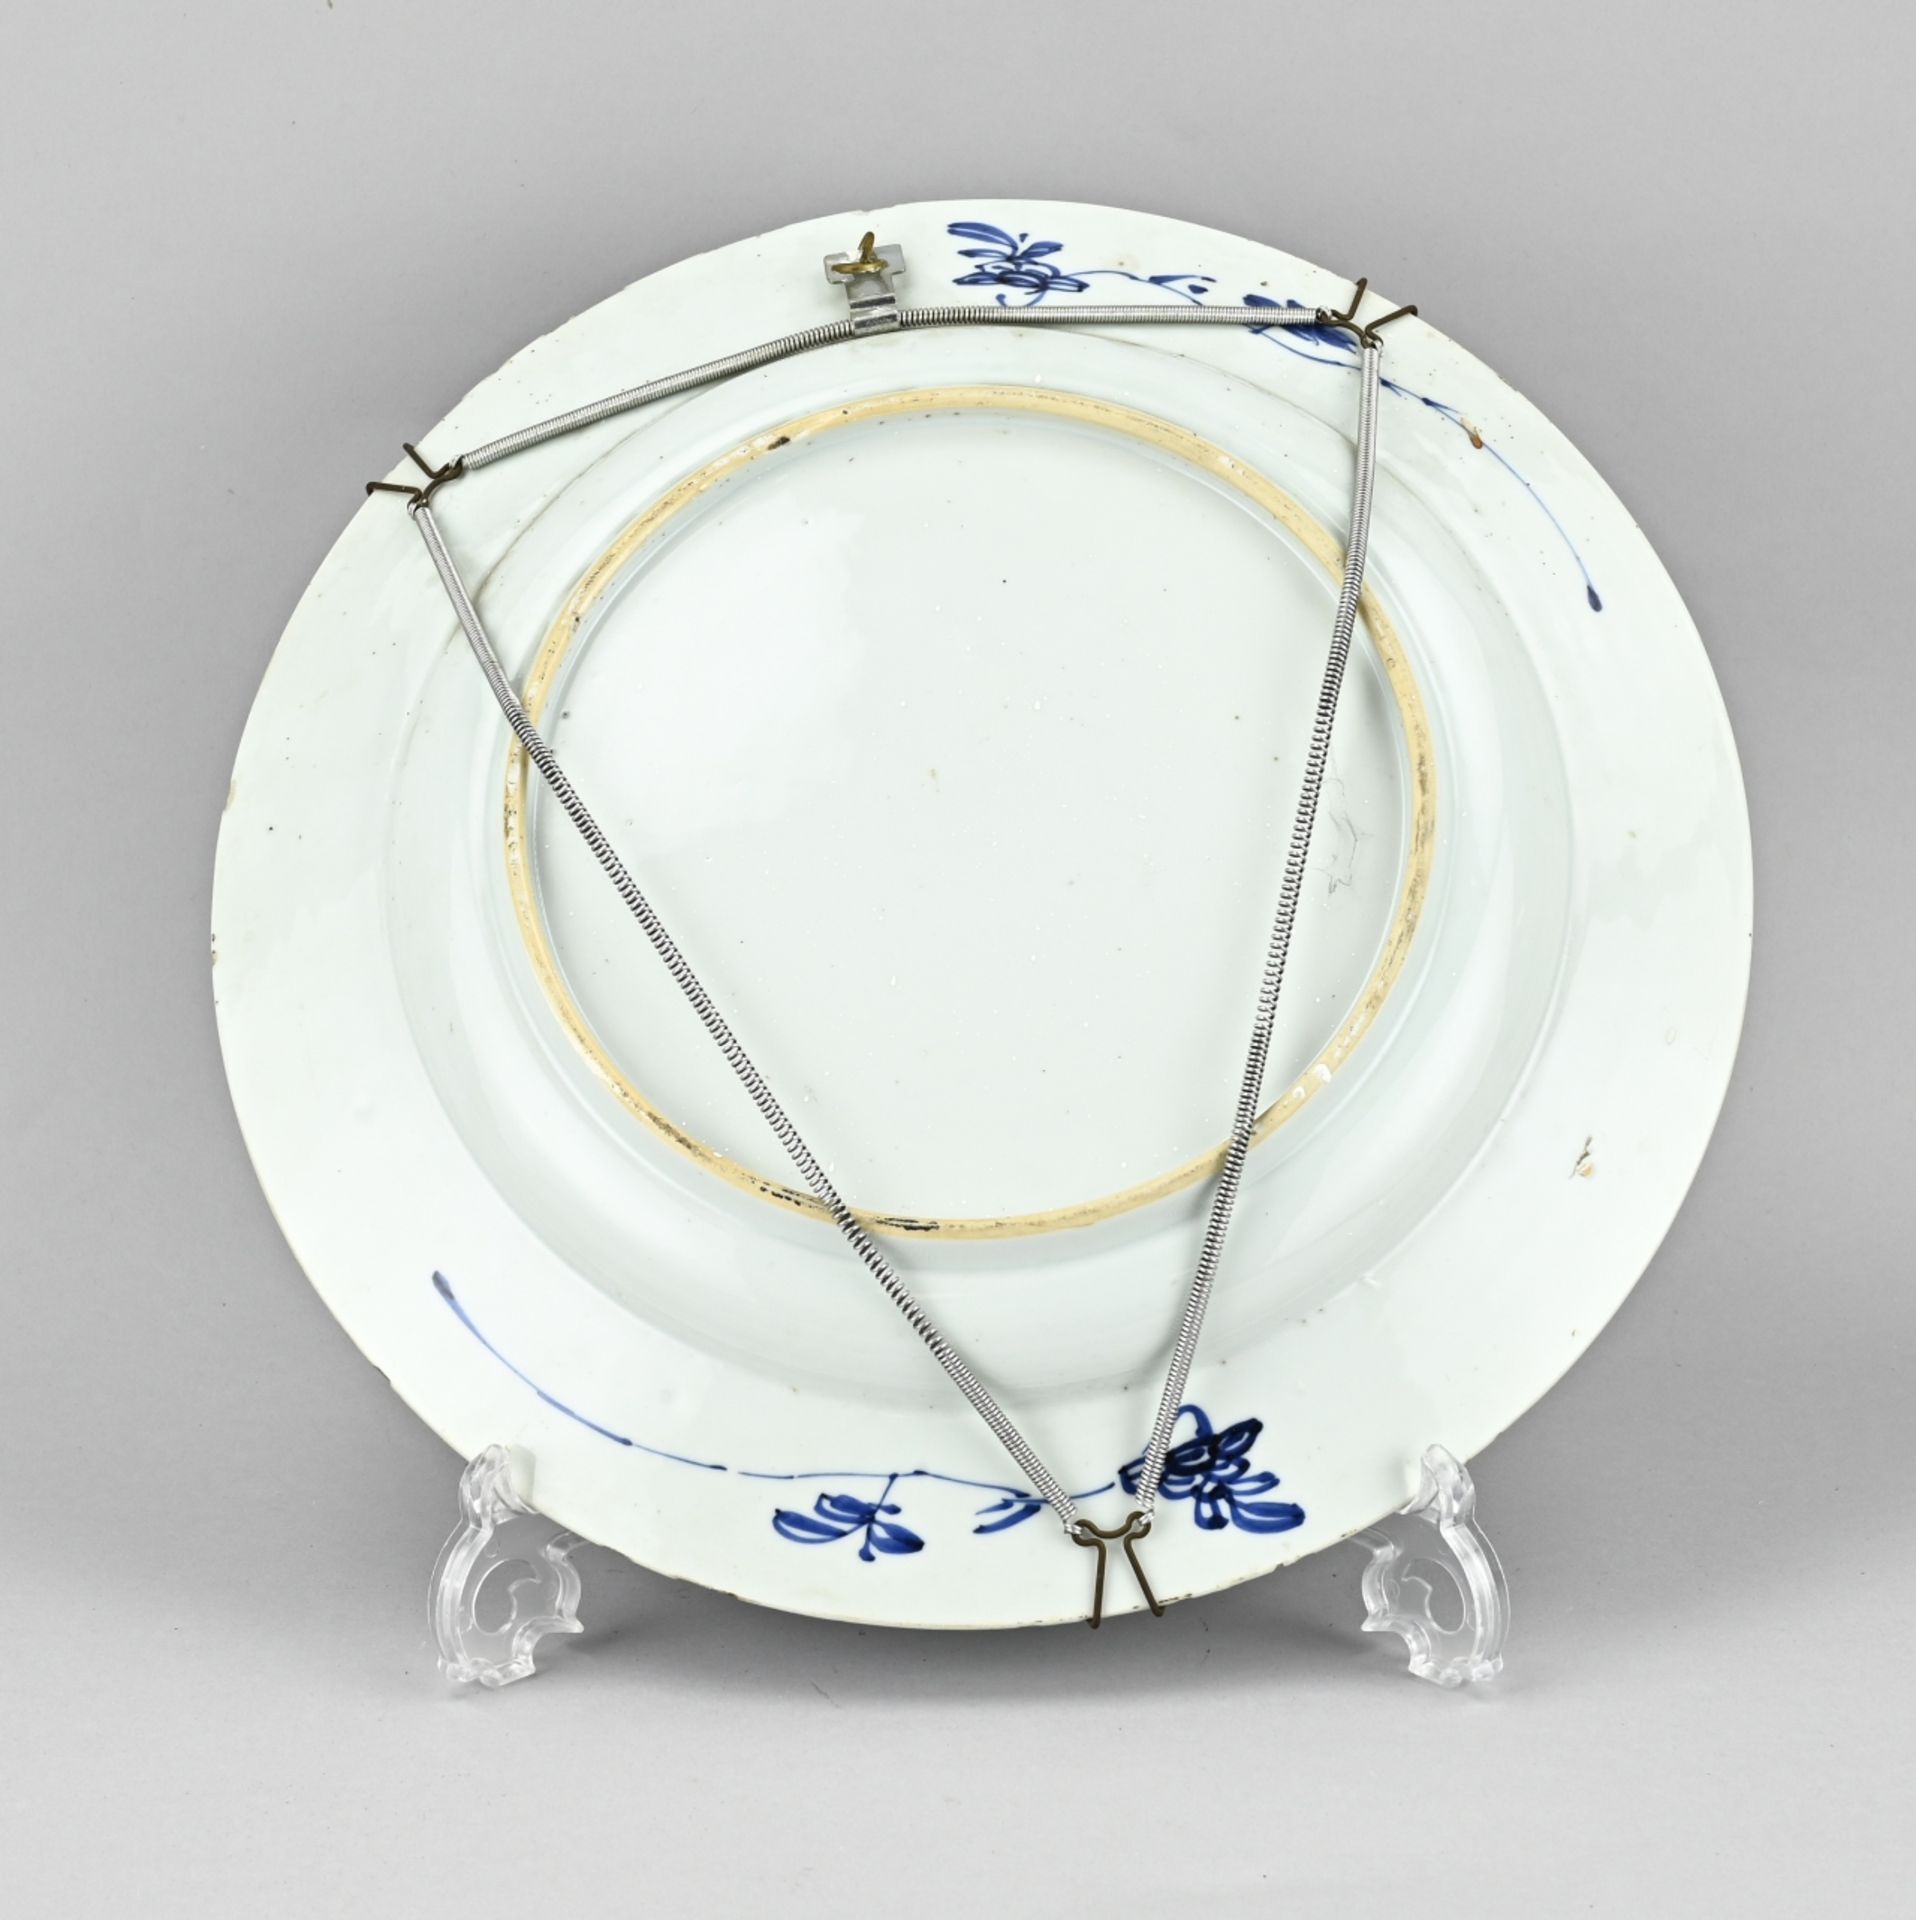 17th Century dish, Ã˜ 35.4 cm. - Image 2 of 2